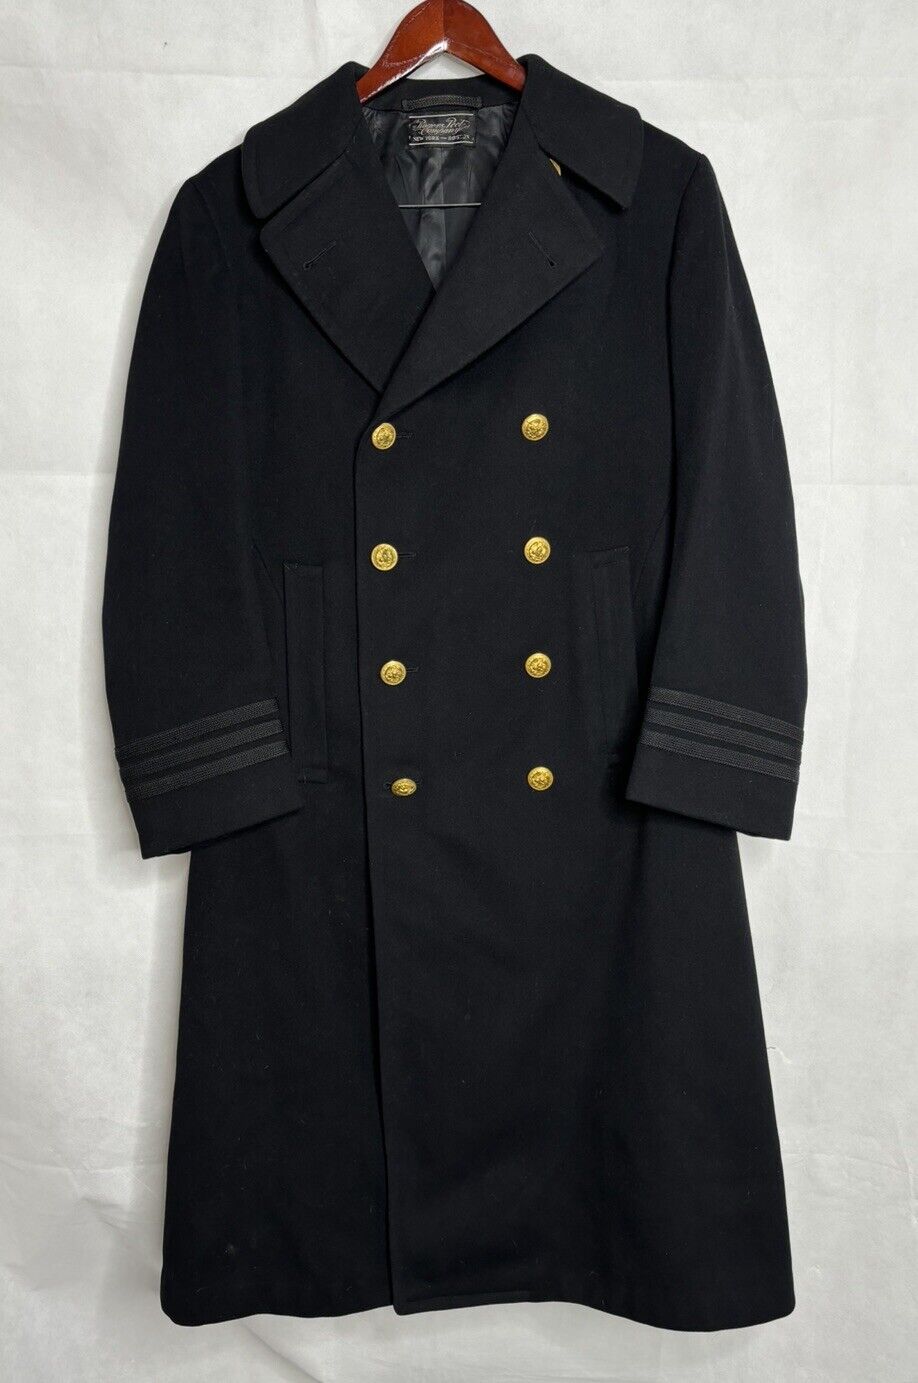 Vintage 1950s US Navy Bridge Coat Wool Black Gold Buttons Military Commander USA